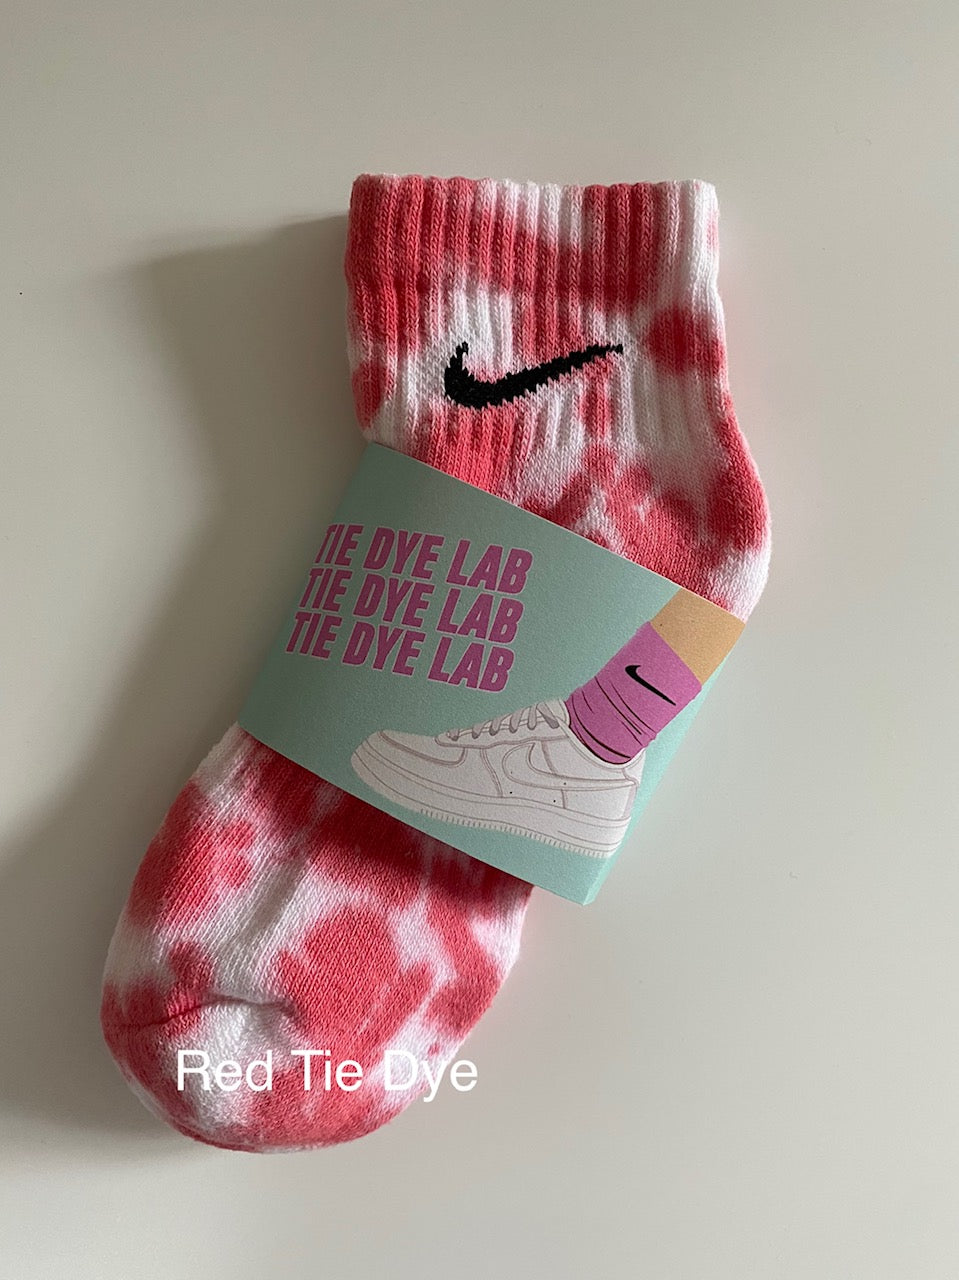 Nike Tie Dye Socks Pink, Purple, Blue Tie Dye Custom Nike Crew Socks